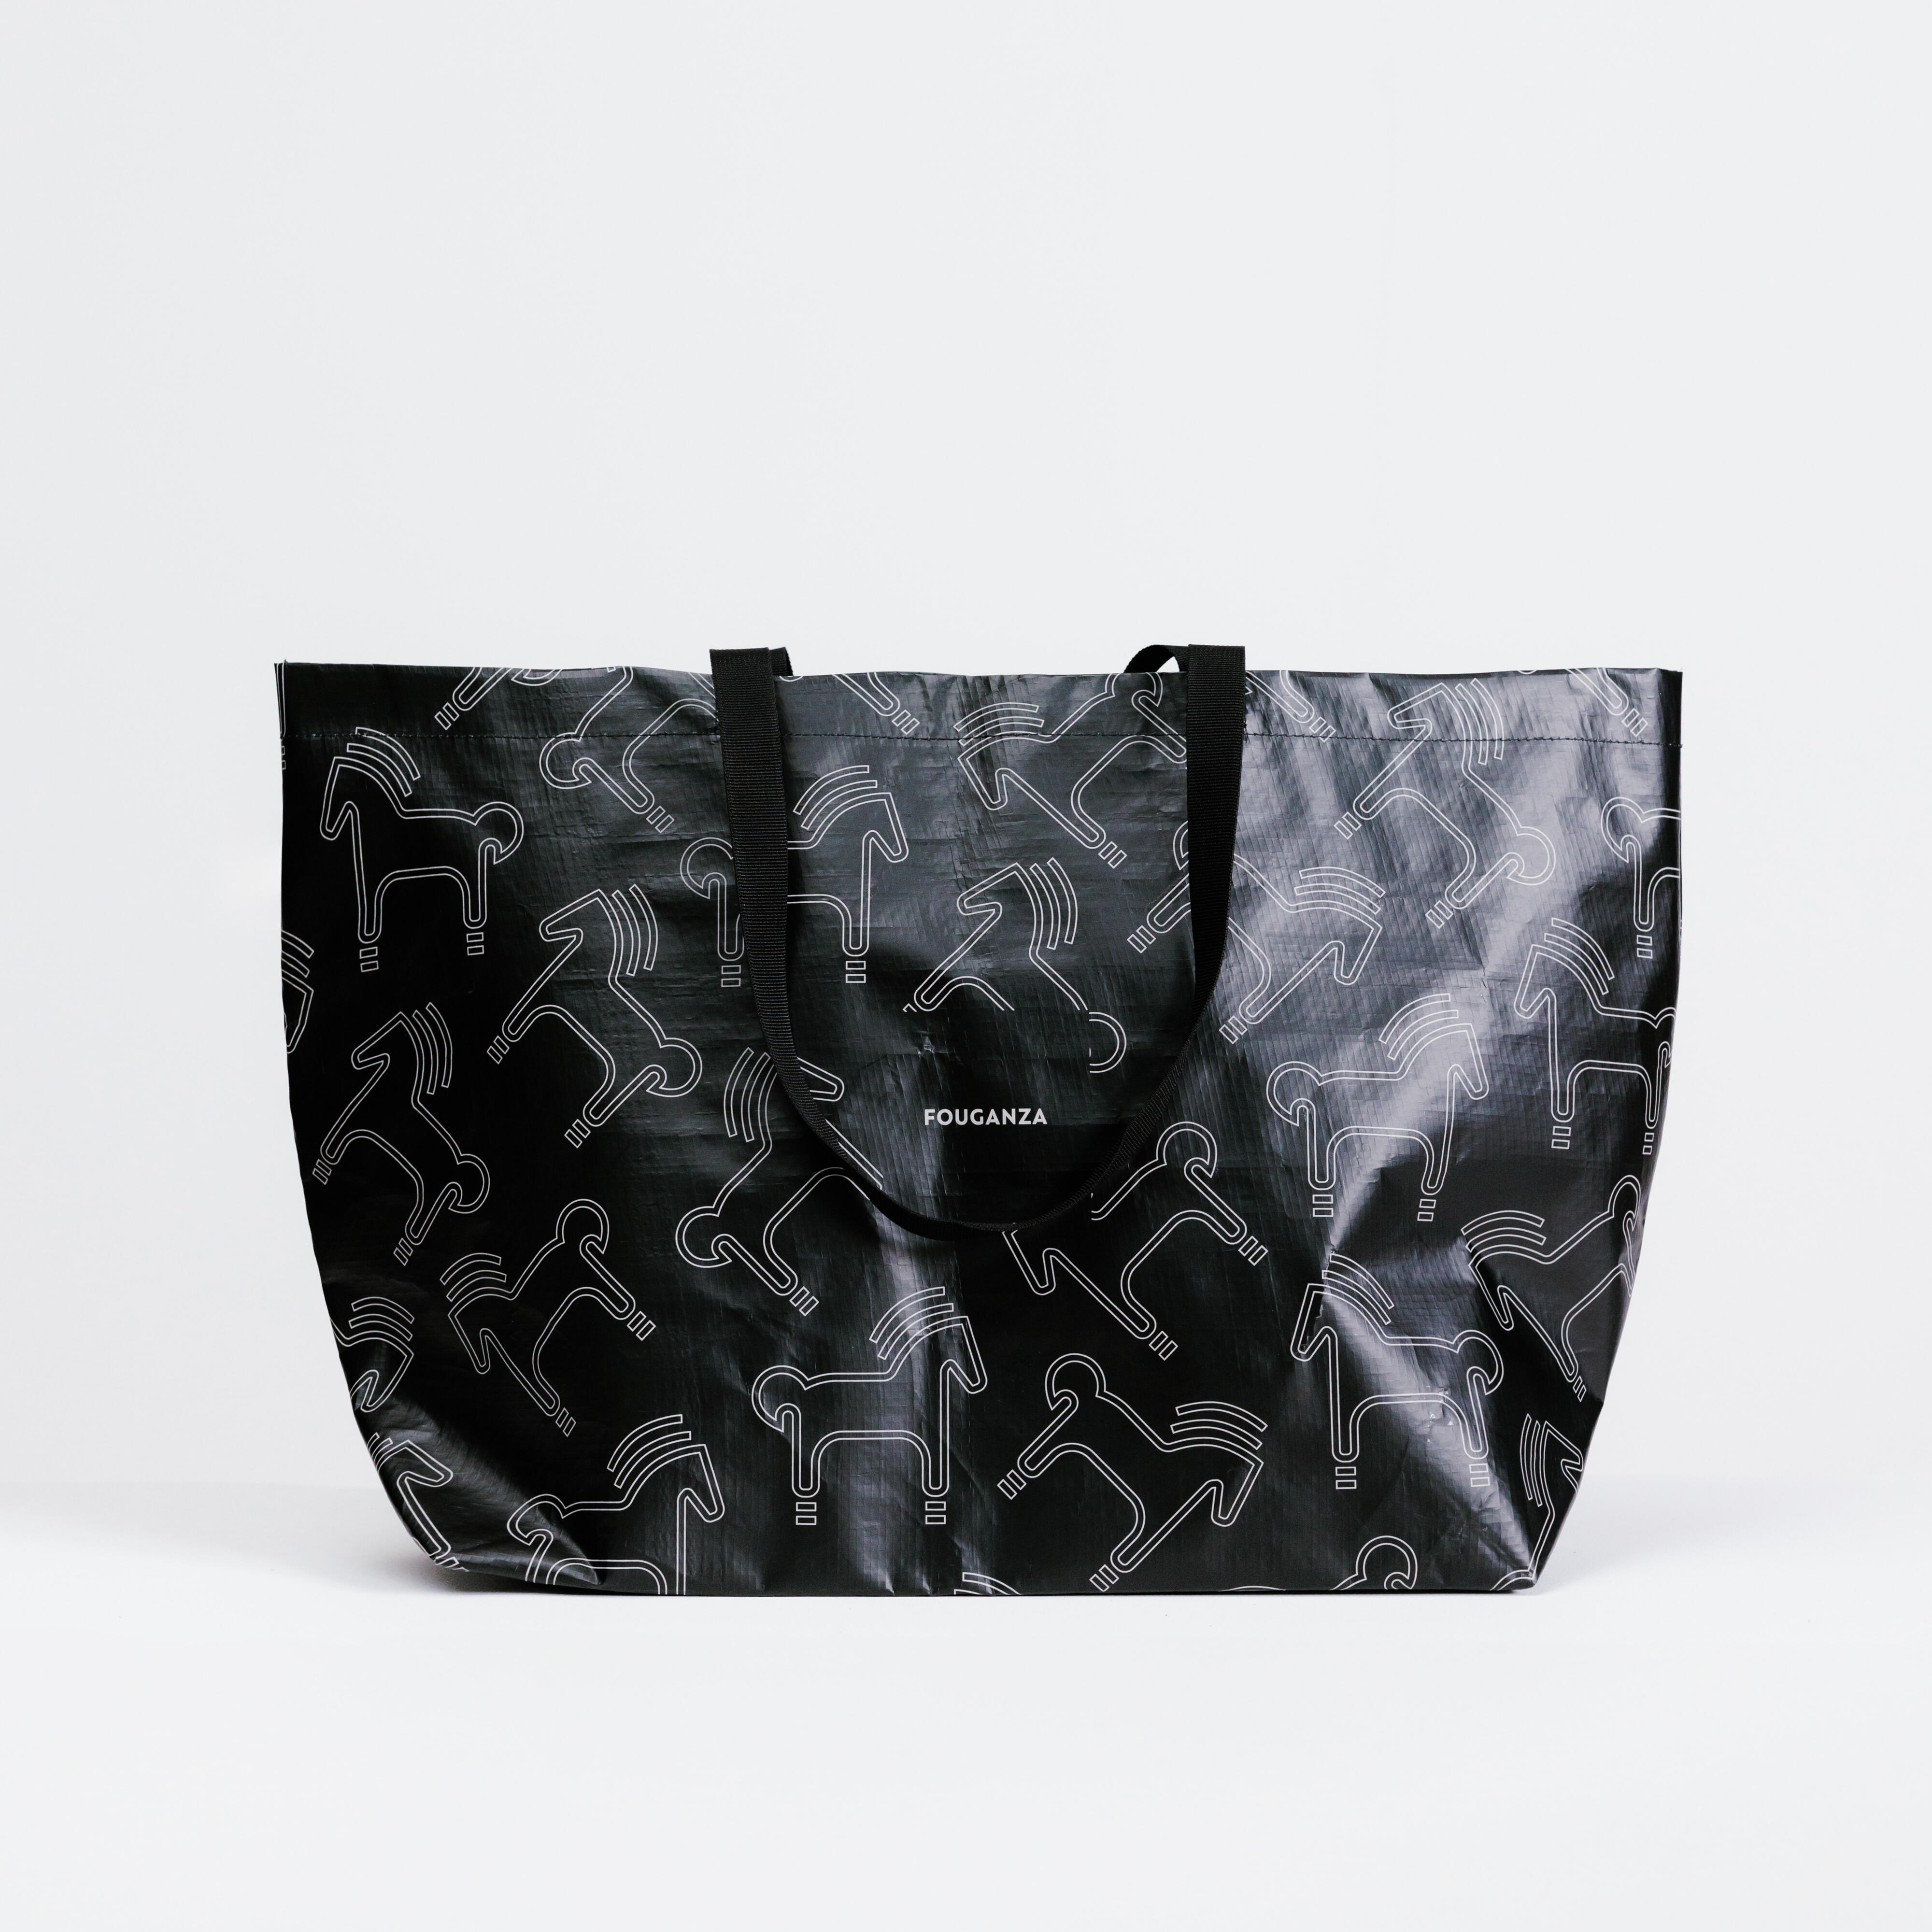 Horse Riding Tote Bag for Horses - Black/Beige